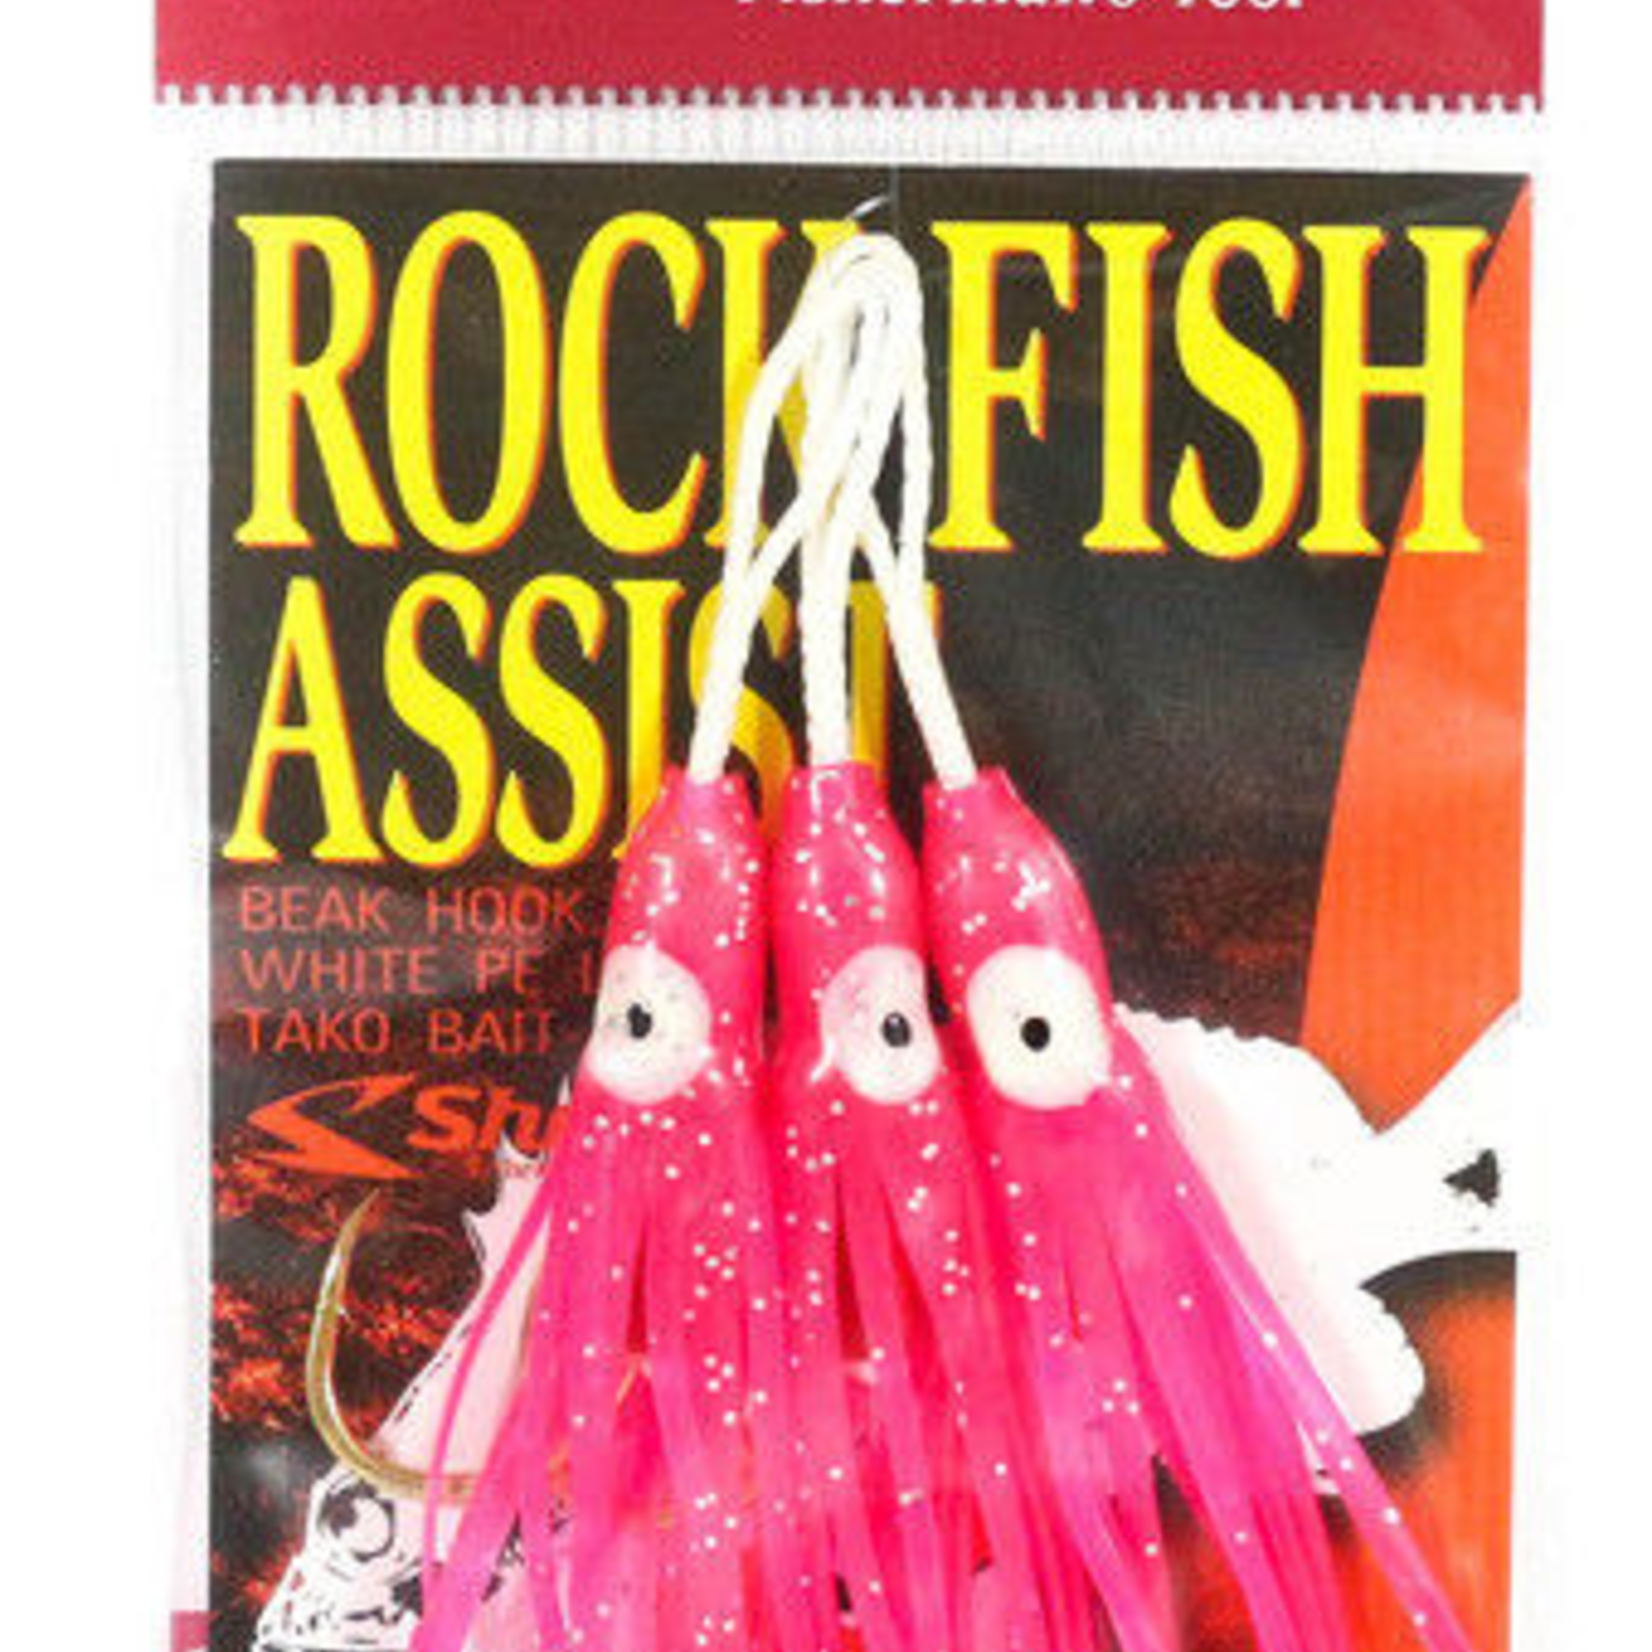 Shout Rock Fish Assist Hook